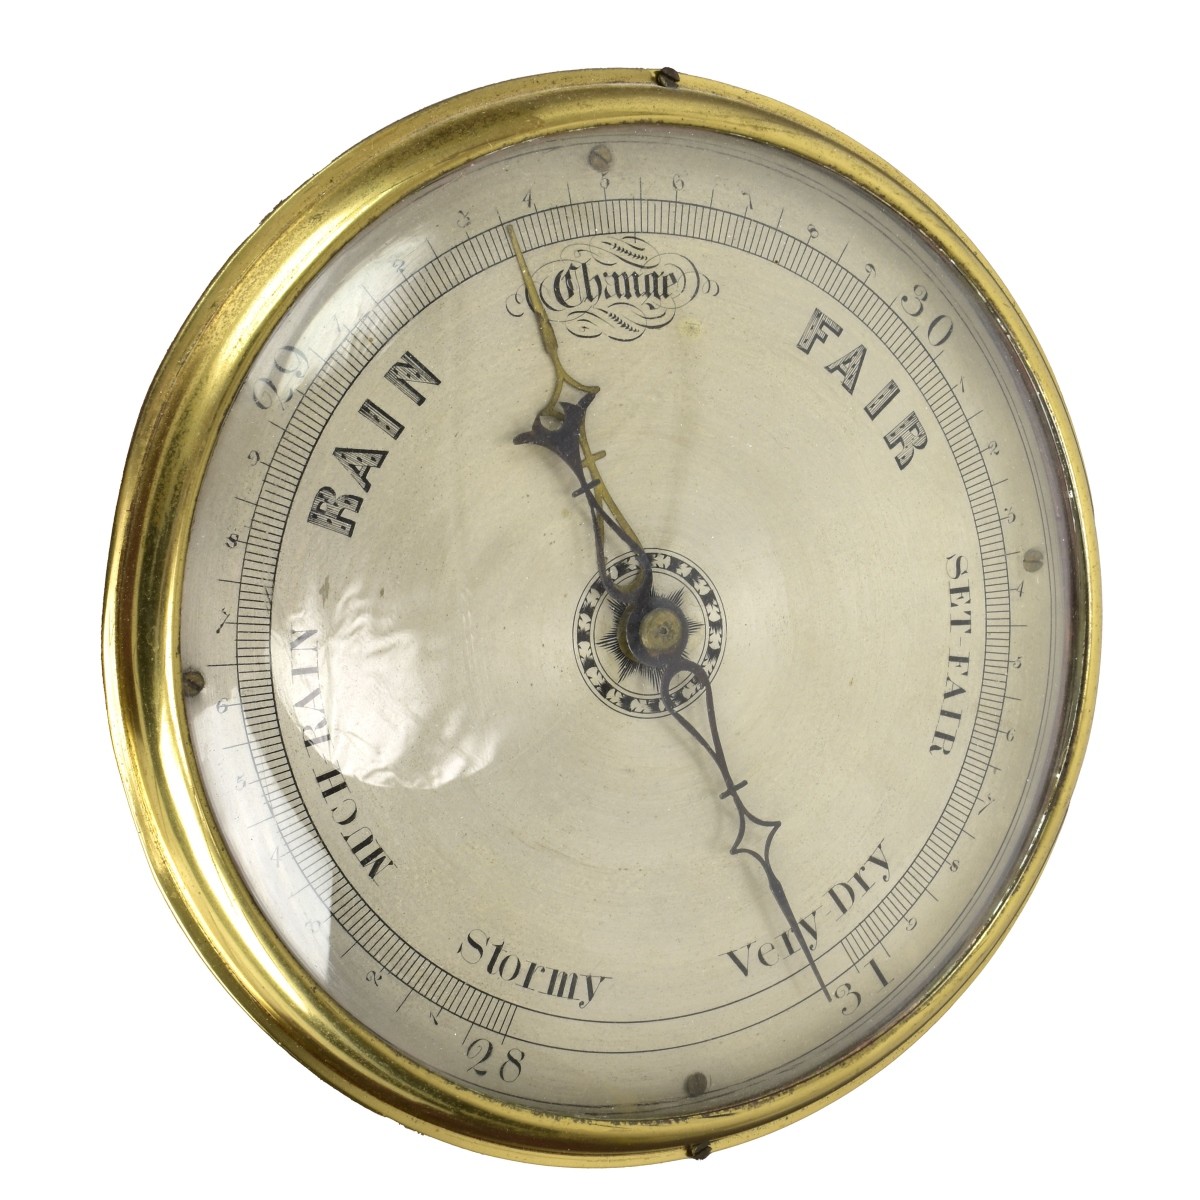 P. Pedretti English Thermometer Barometer